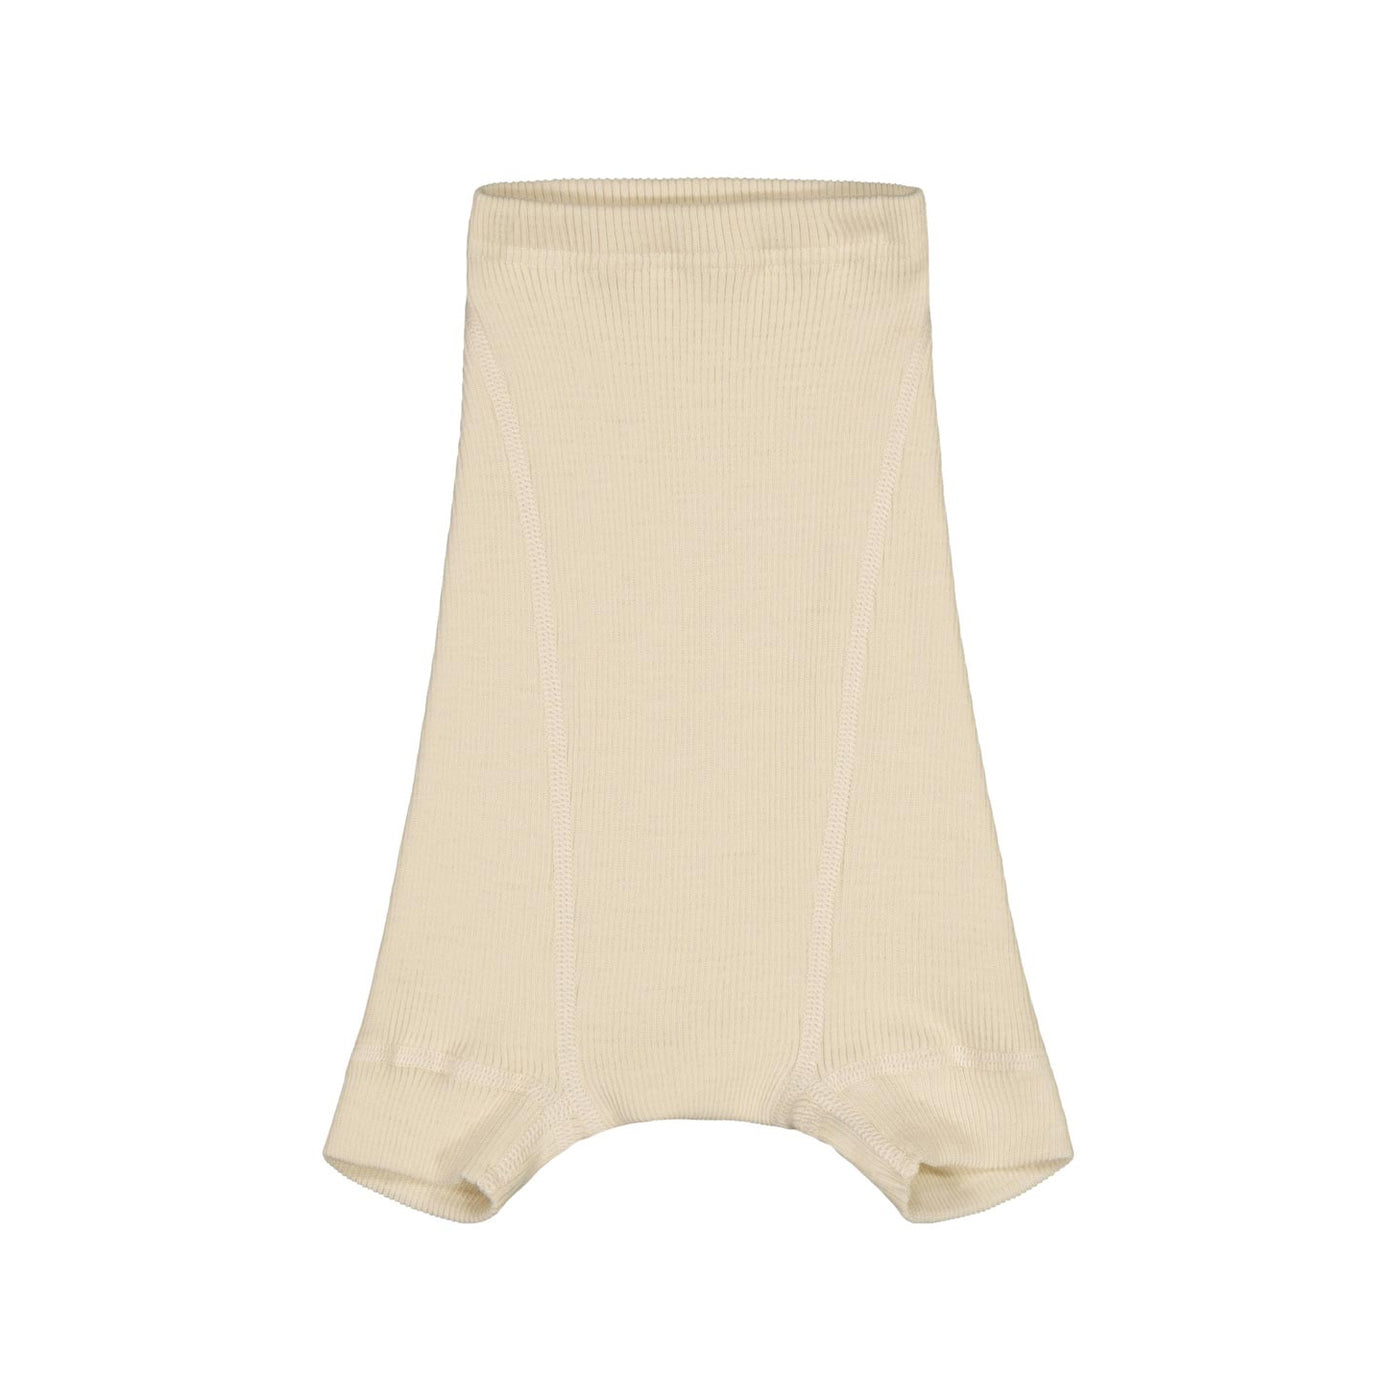 Ruskovilla short nappy pants merino wool organic diaper cover